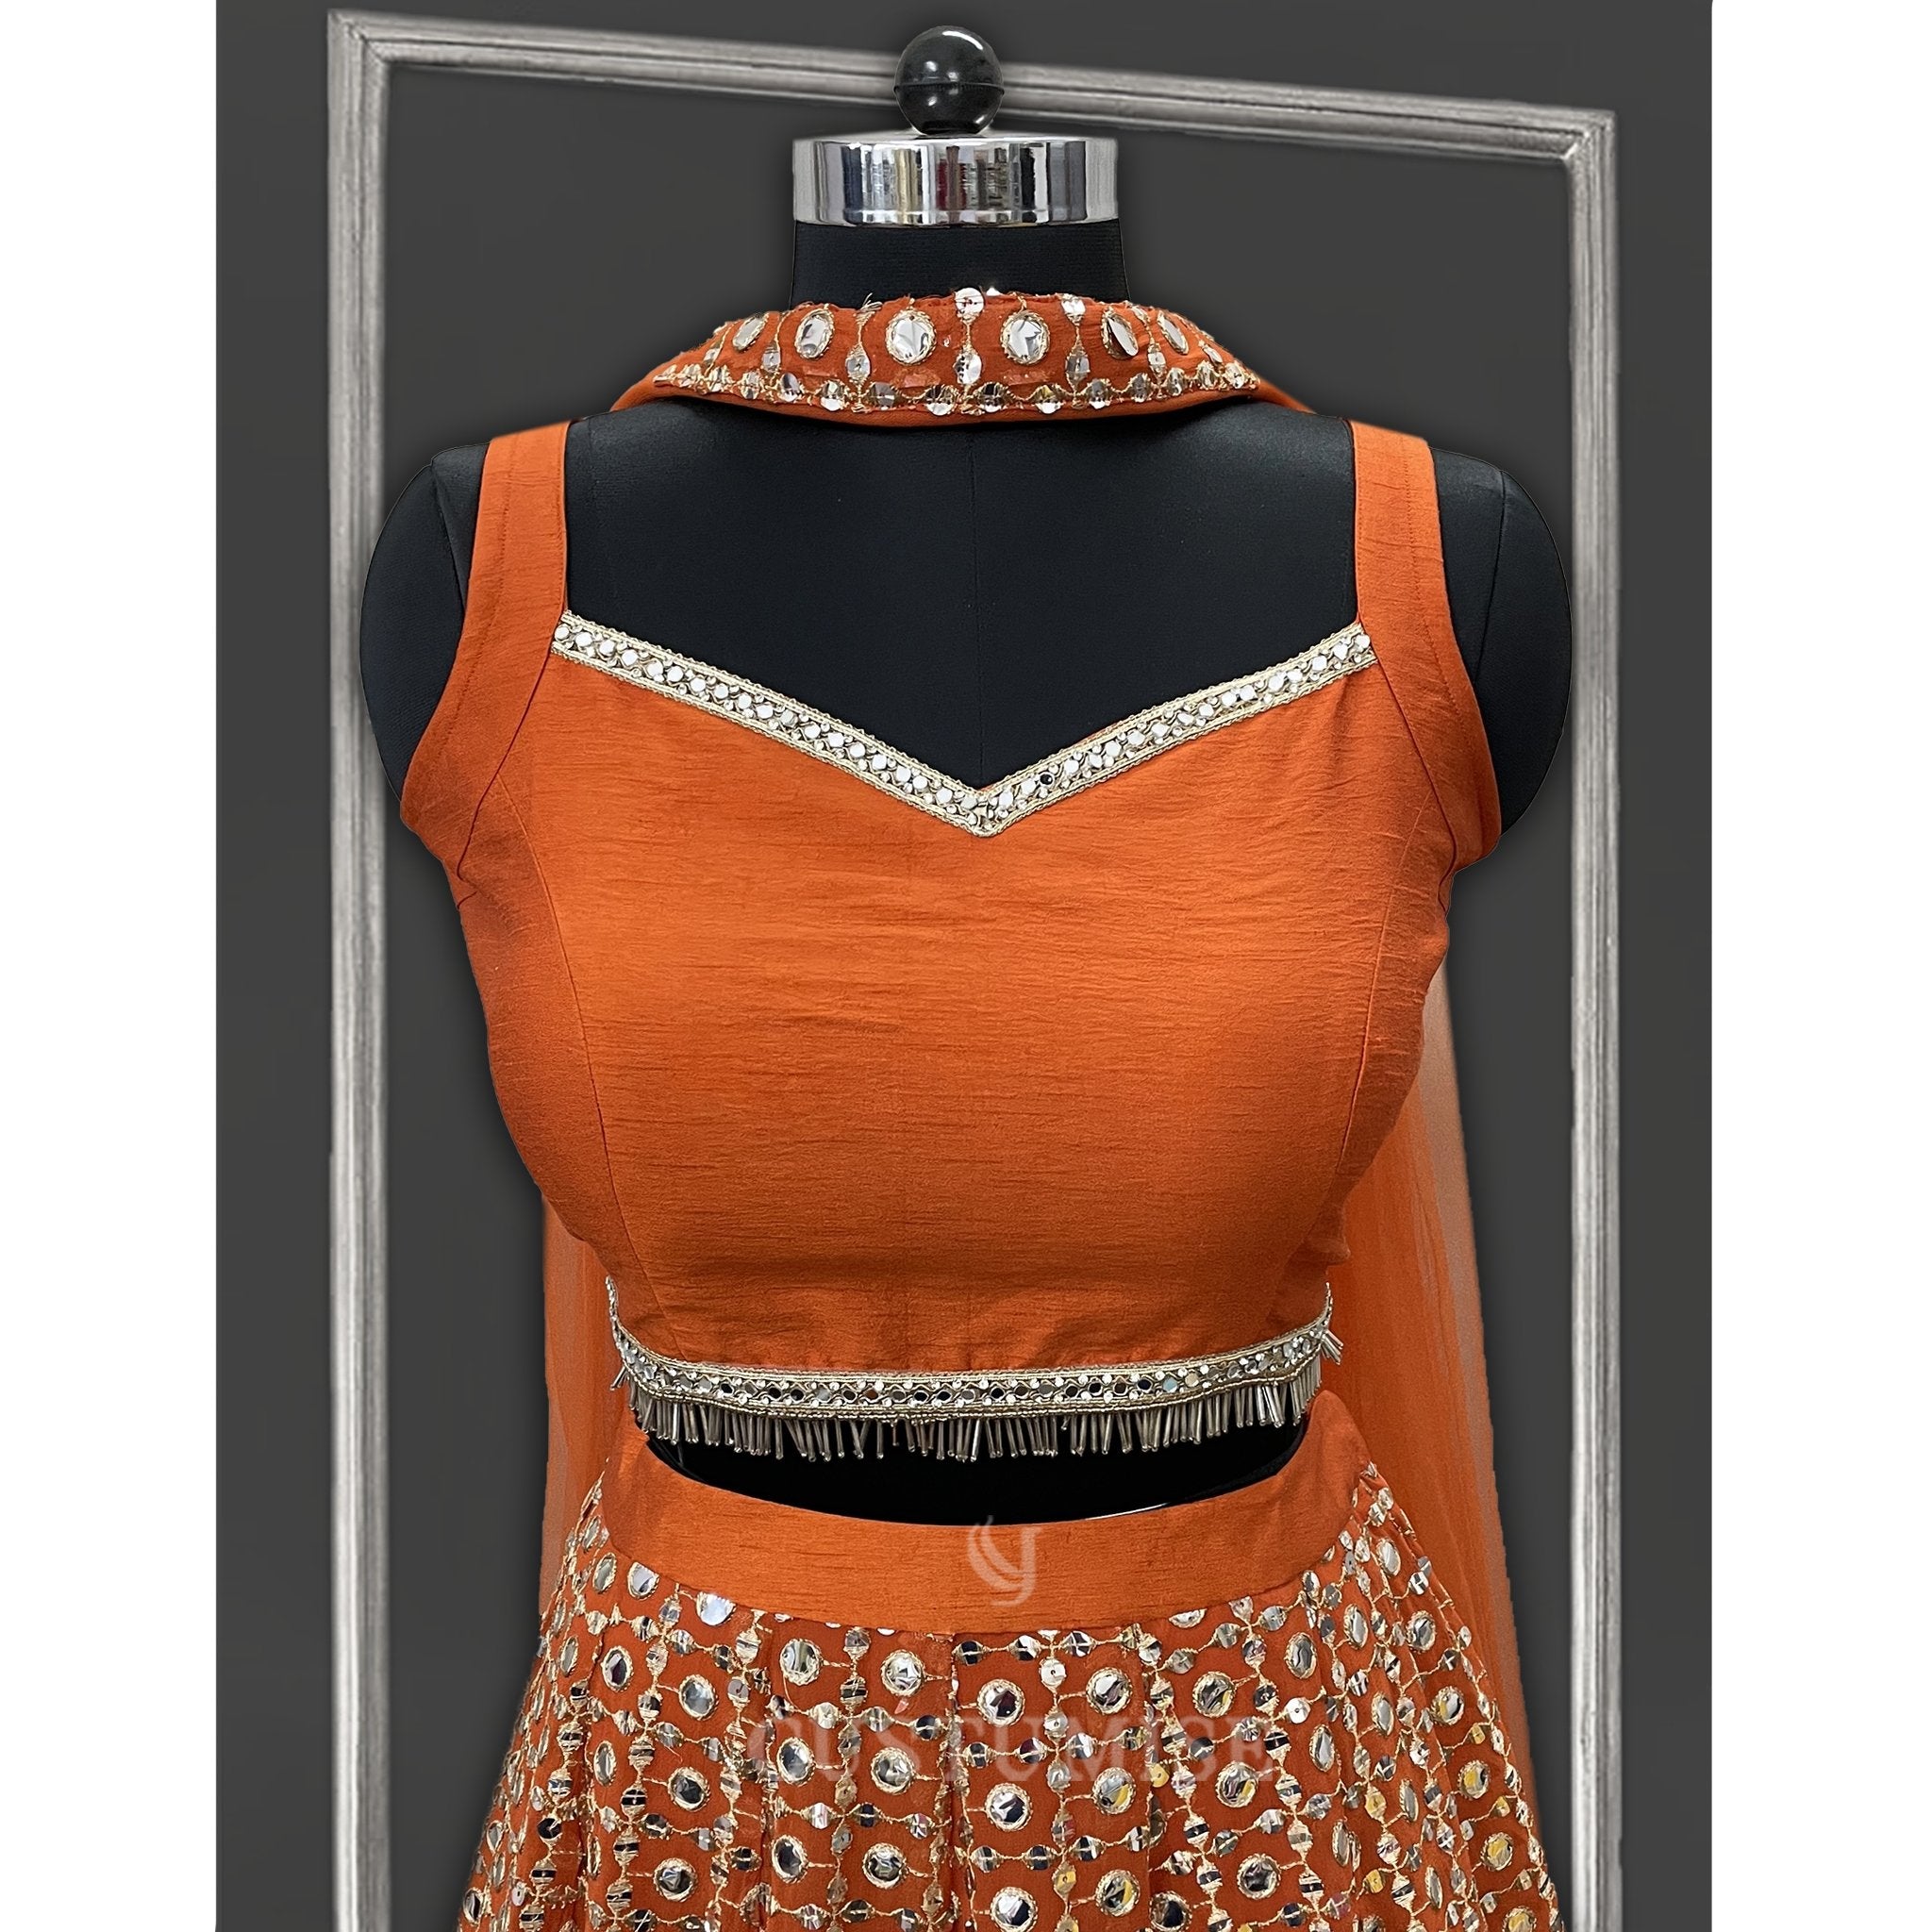 Orange Faux Mirror lehenga - Indian Designer Bridal Wedding Outfit